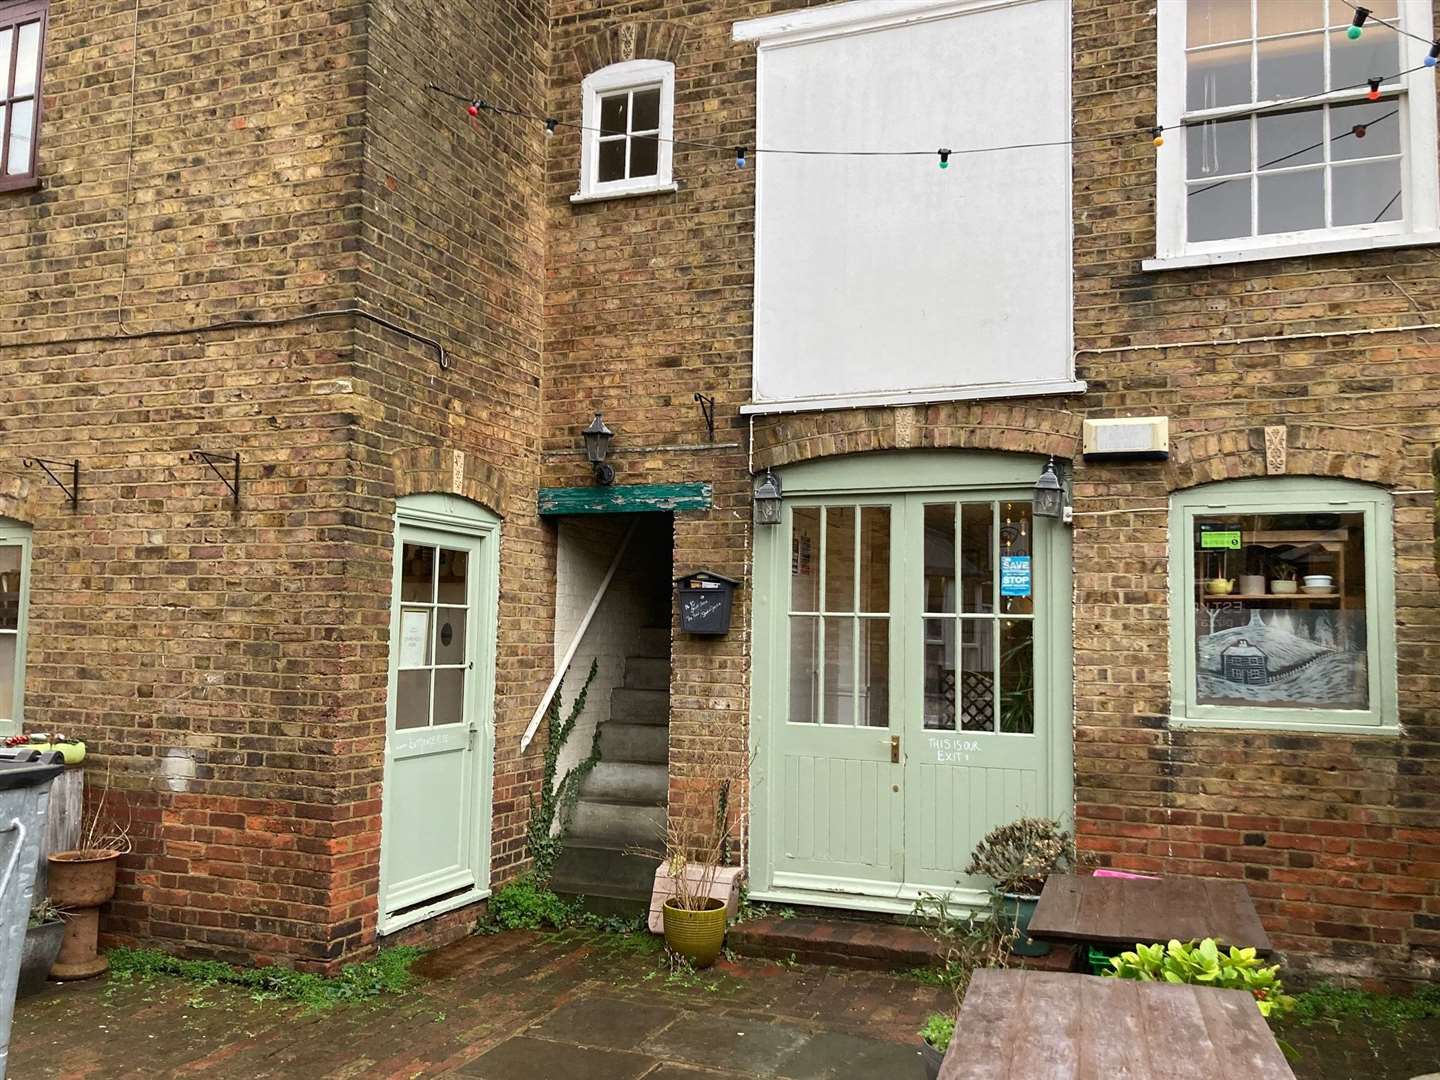 The Yard café in Faversham has closed